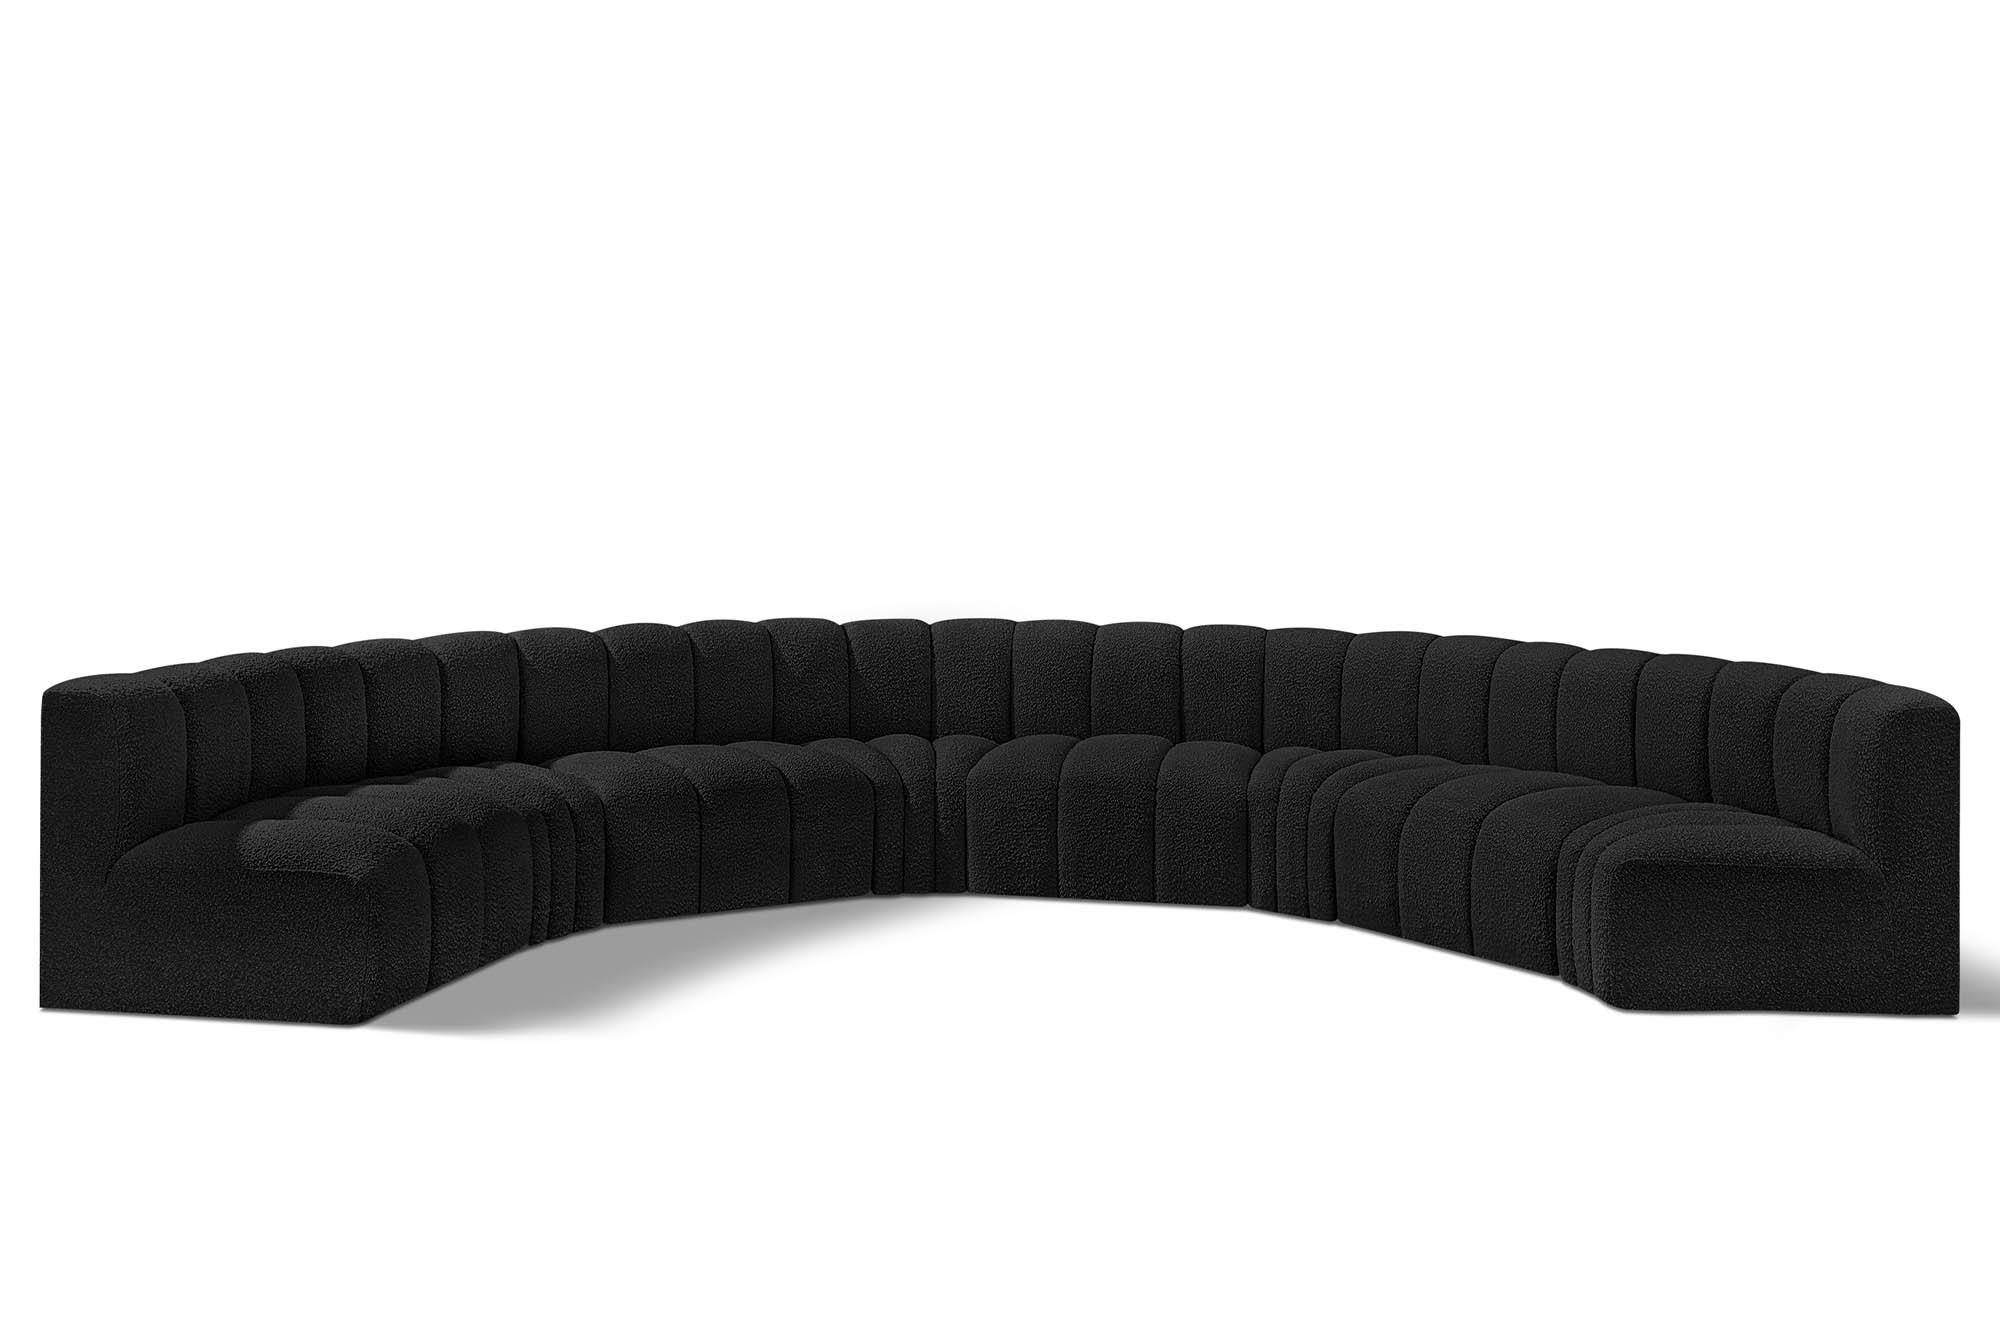 Contemporary, Modern Modular Sectional Sofa ARC 102Black-S8B 102Black-S8B in Black 